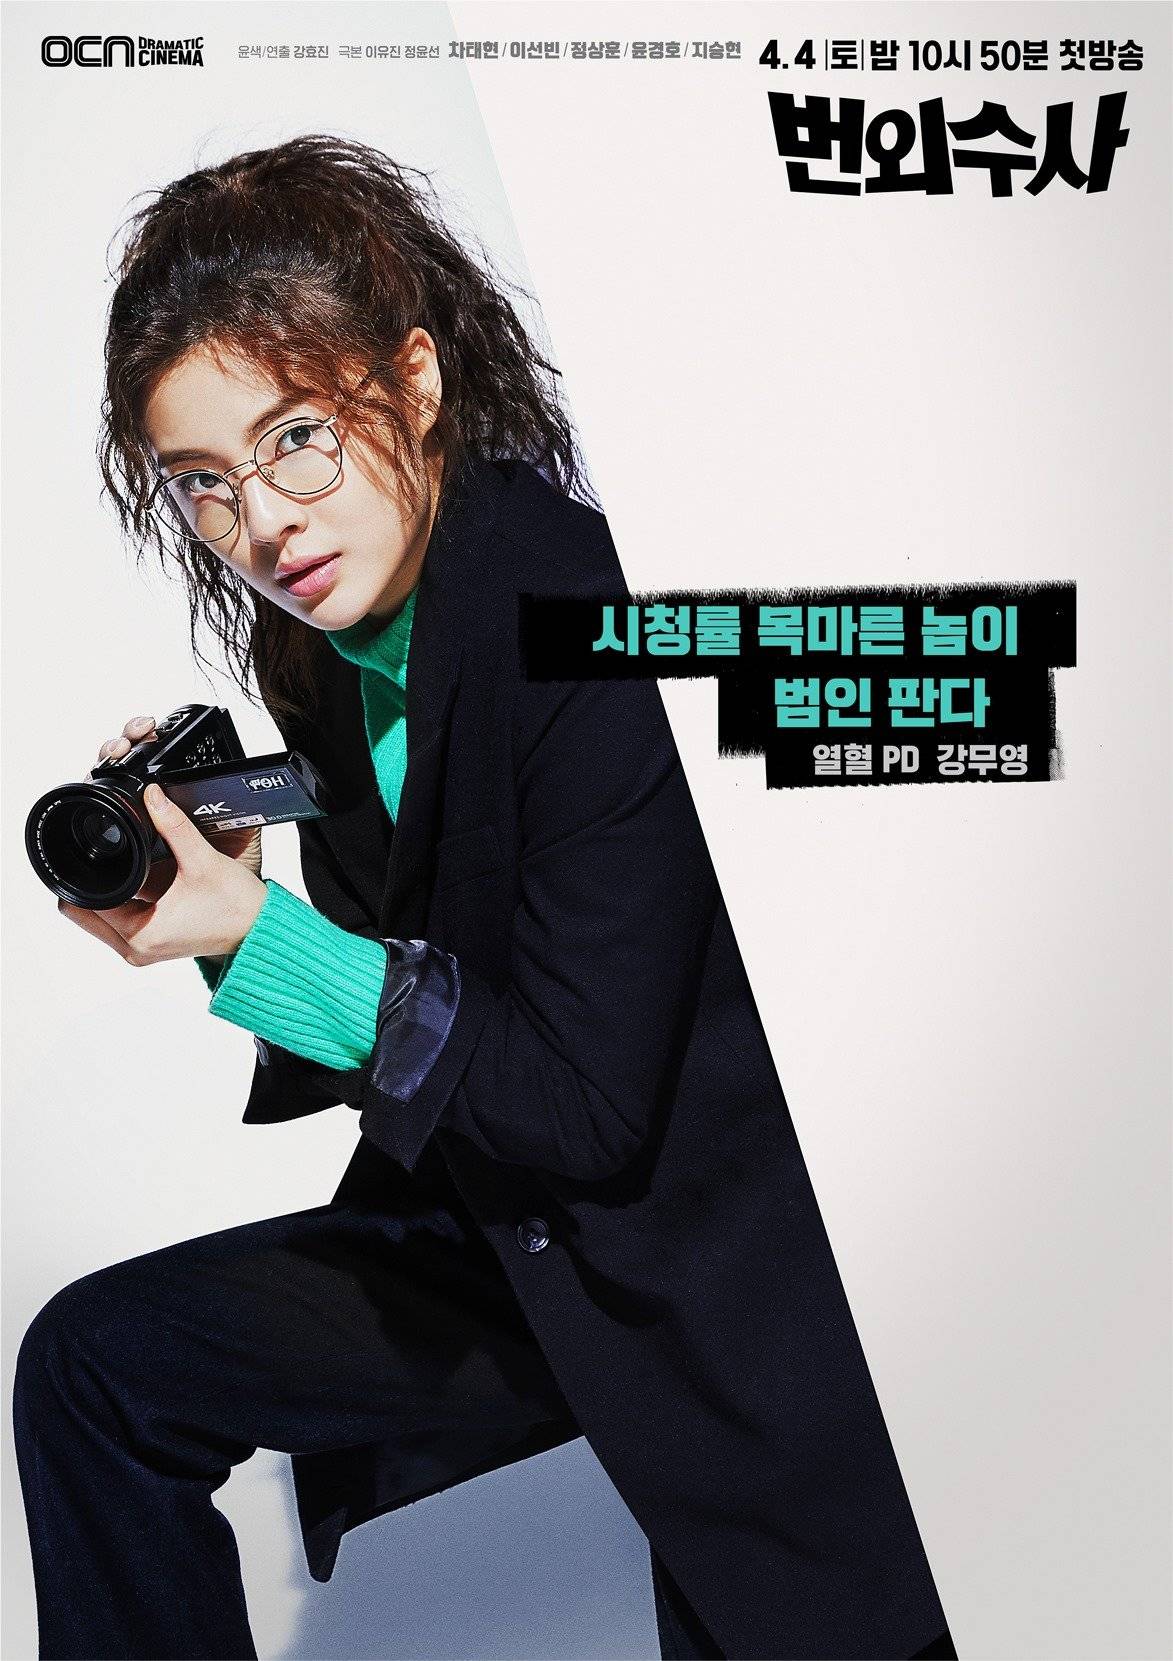 Team Bulldog: Off-duty Investigation (번외수사) Korean - Drama - Picture @  HanCinema :: The Korean Movie and Drama Database